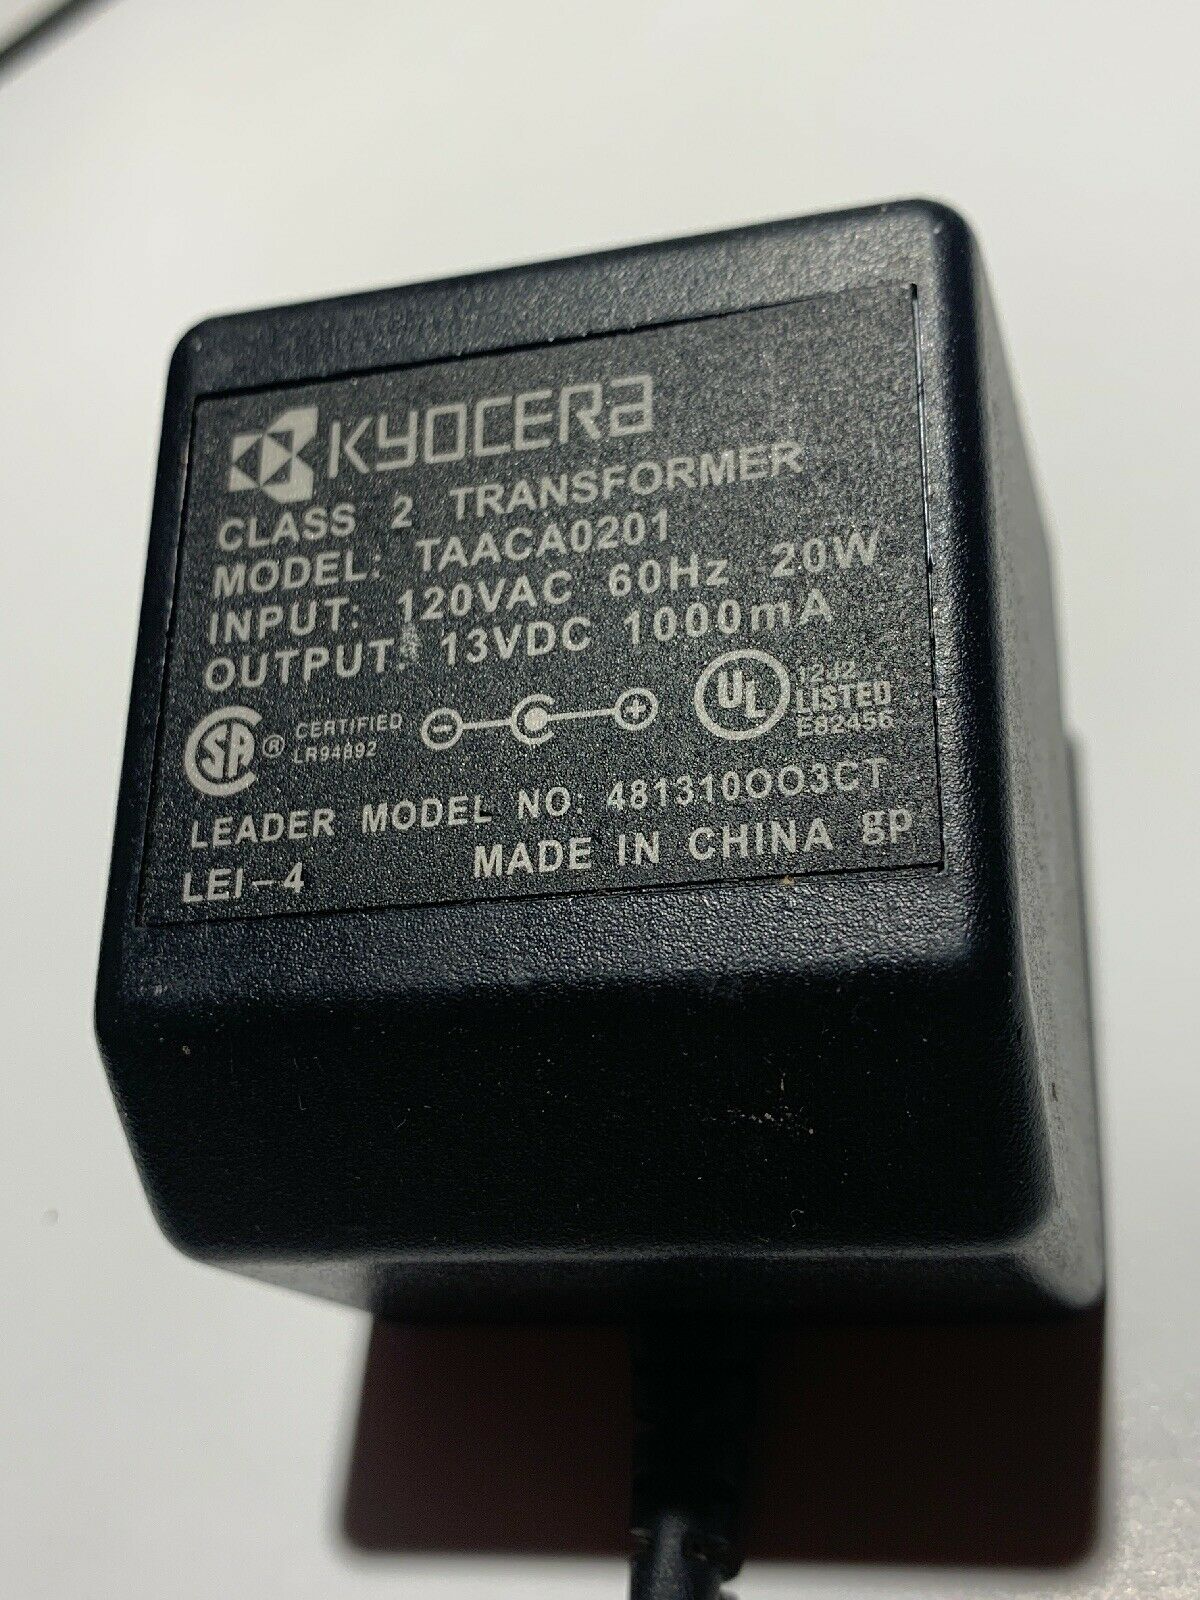 New 13V 1A Kyocera TAACA0201 Class 2 Transformer Power Supply Ac Adapter